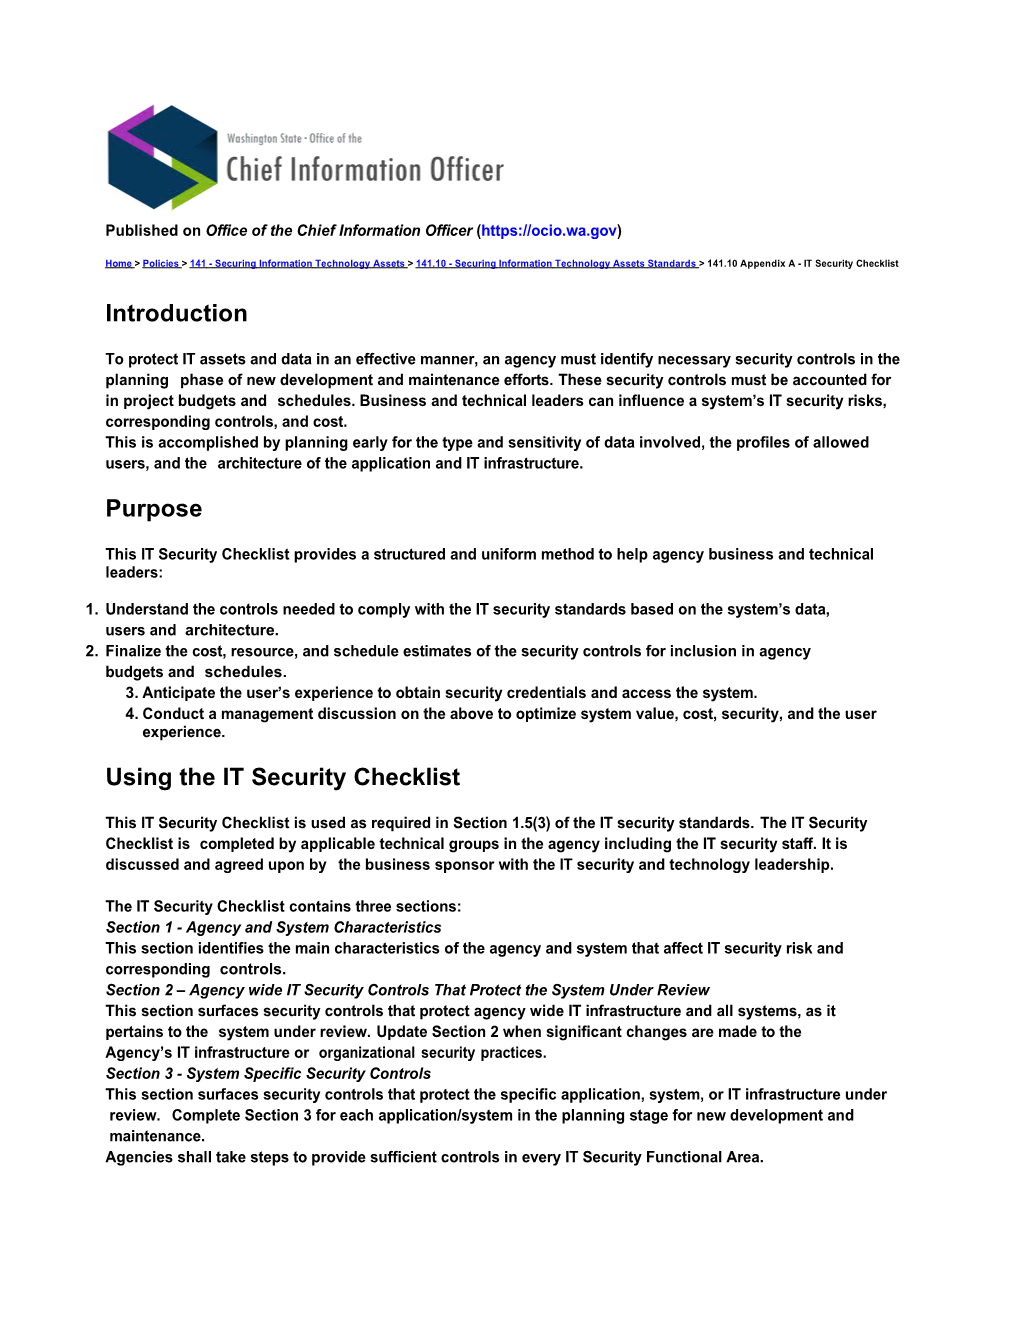 141.10 Appendix a - IT Security Checklist